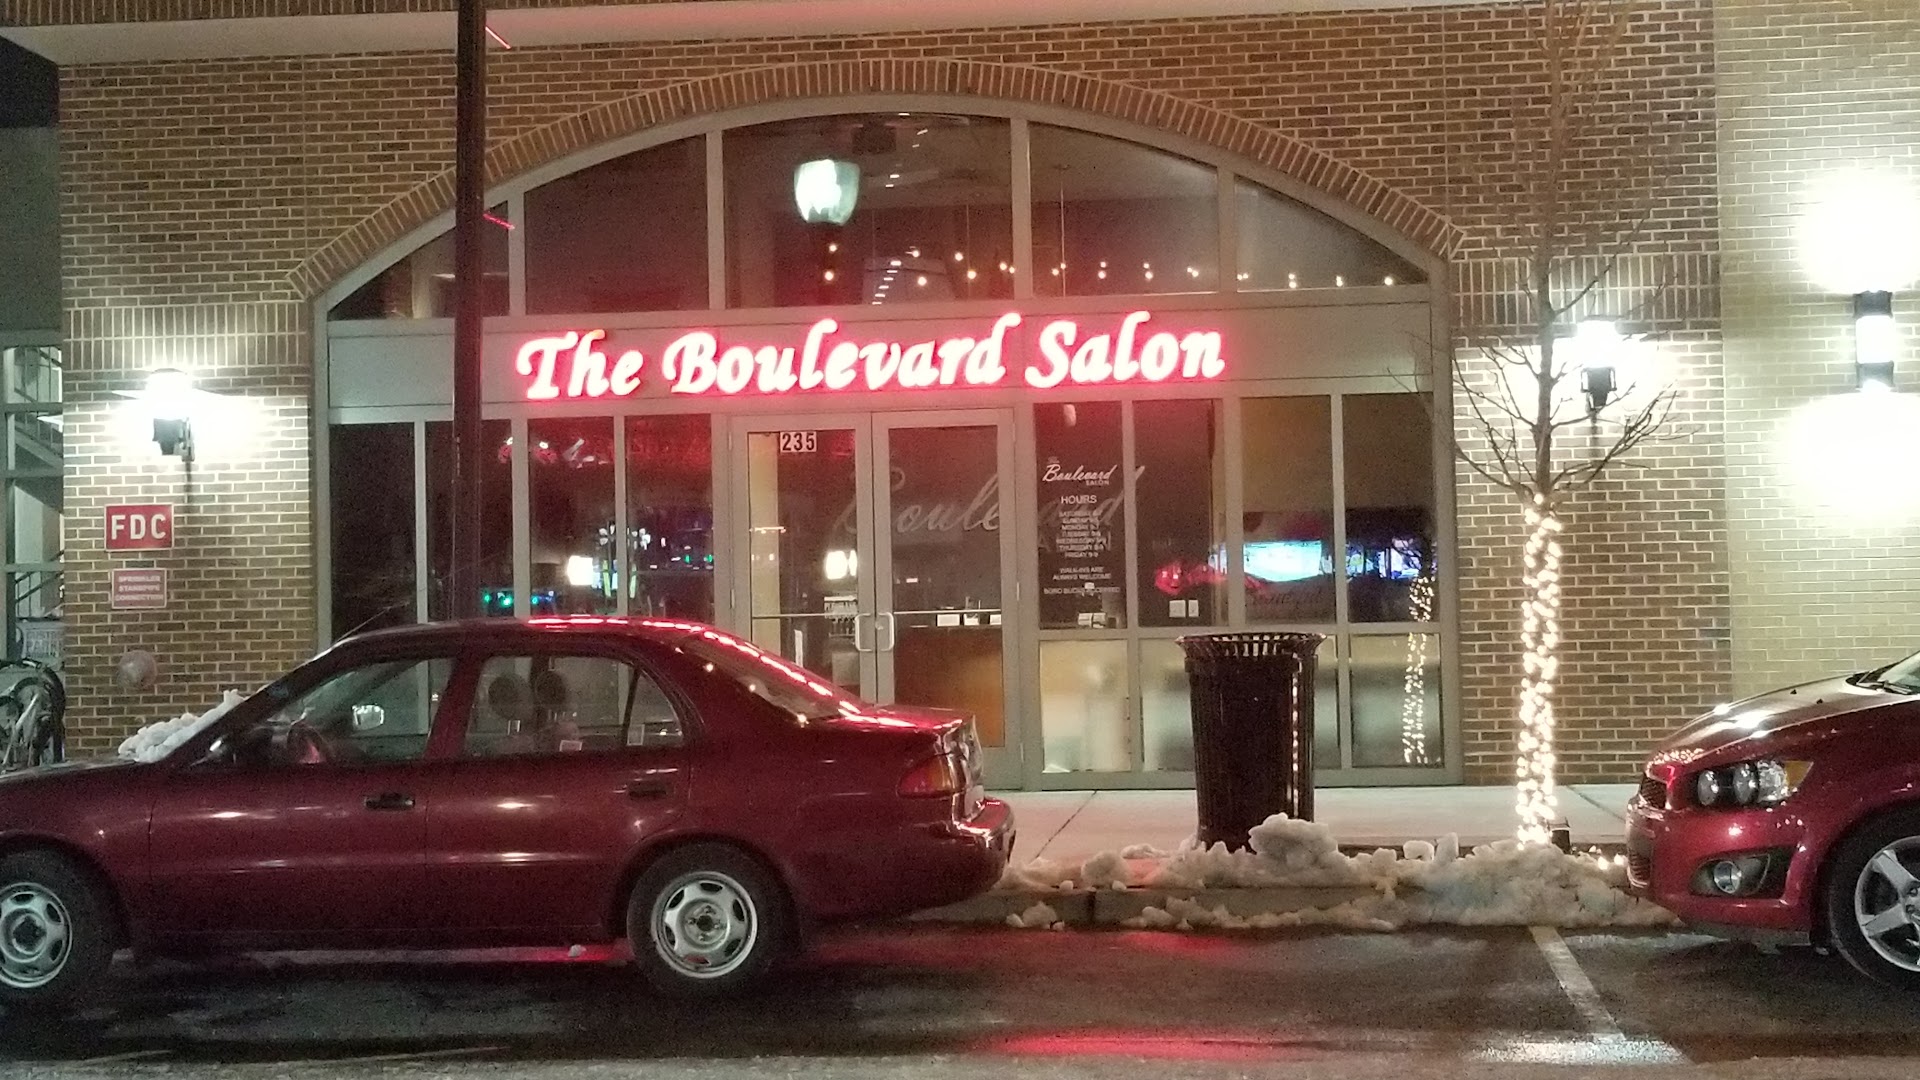 The Boulevard Salon